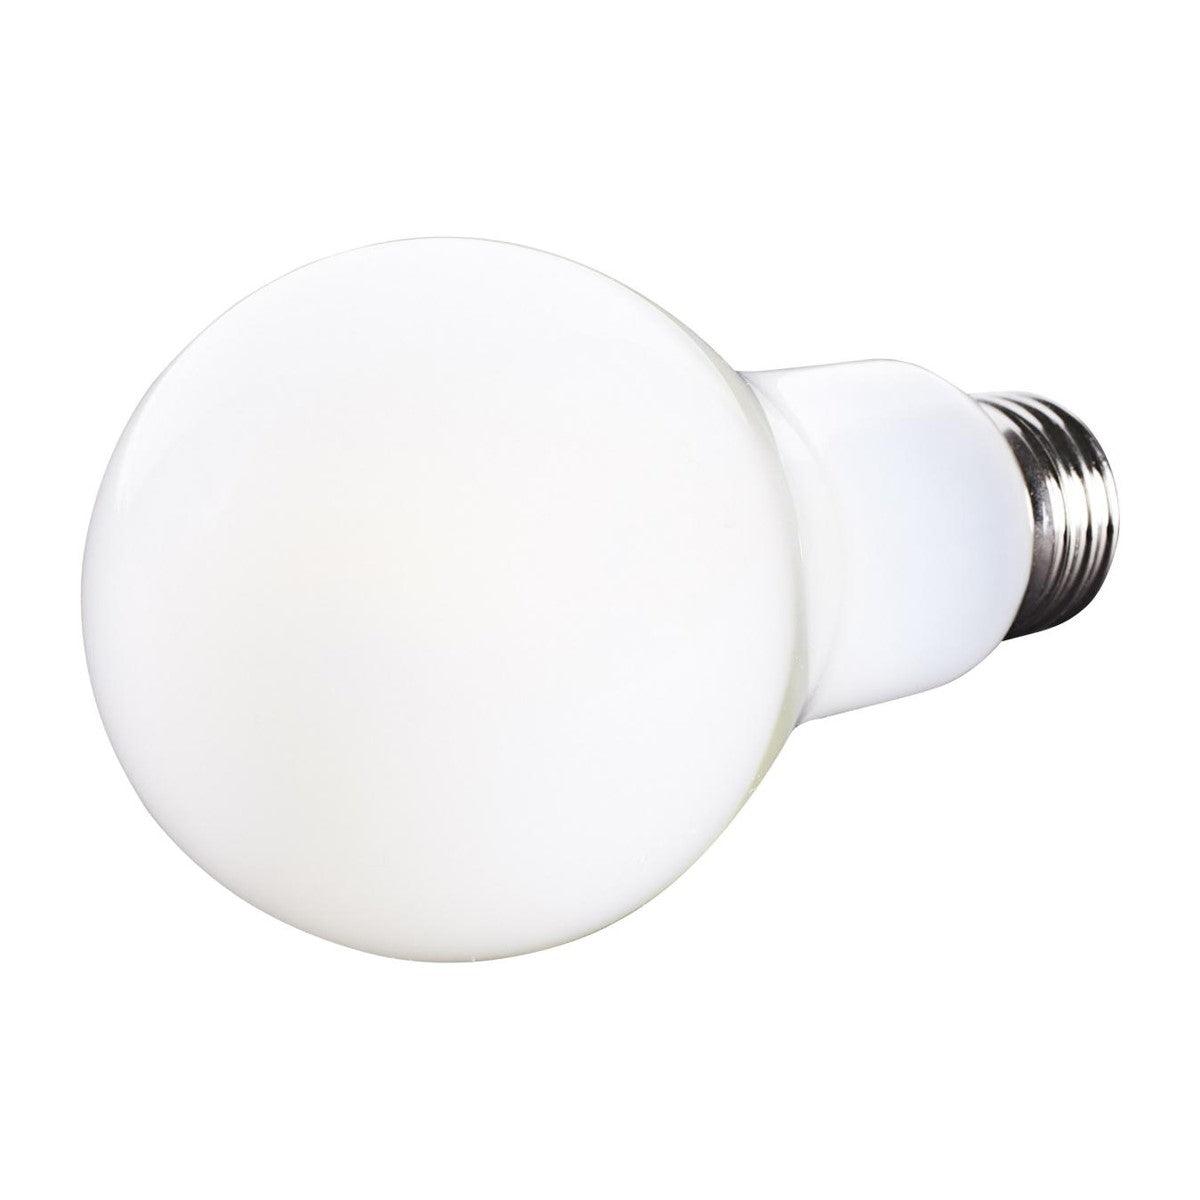 A21 LED Bulb, 17 Watt, 2000 Lumens, 5000K, E26 Medium Base, Frosted Finish